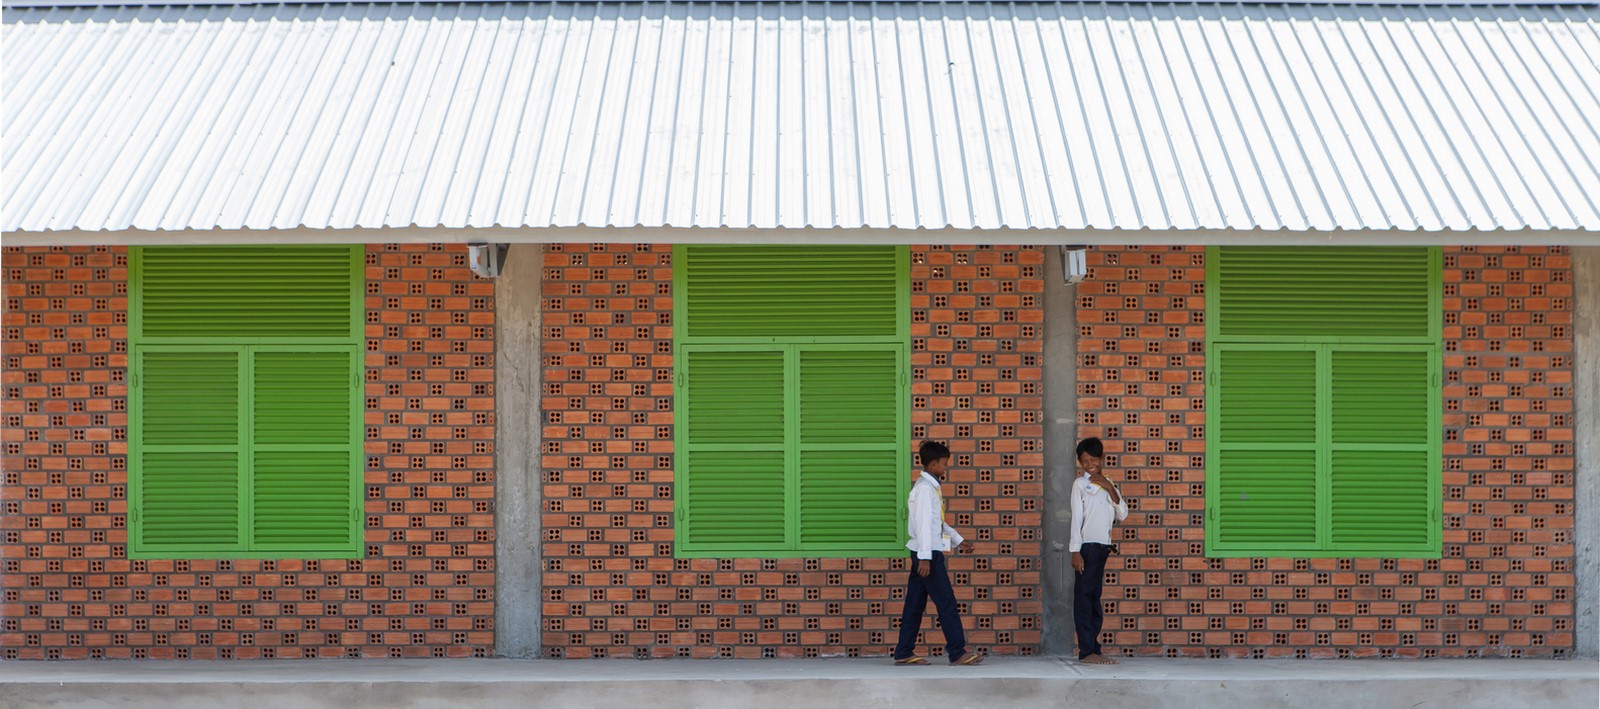 Khyaung School in Cambodia - Sheet1